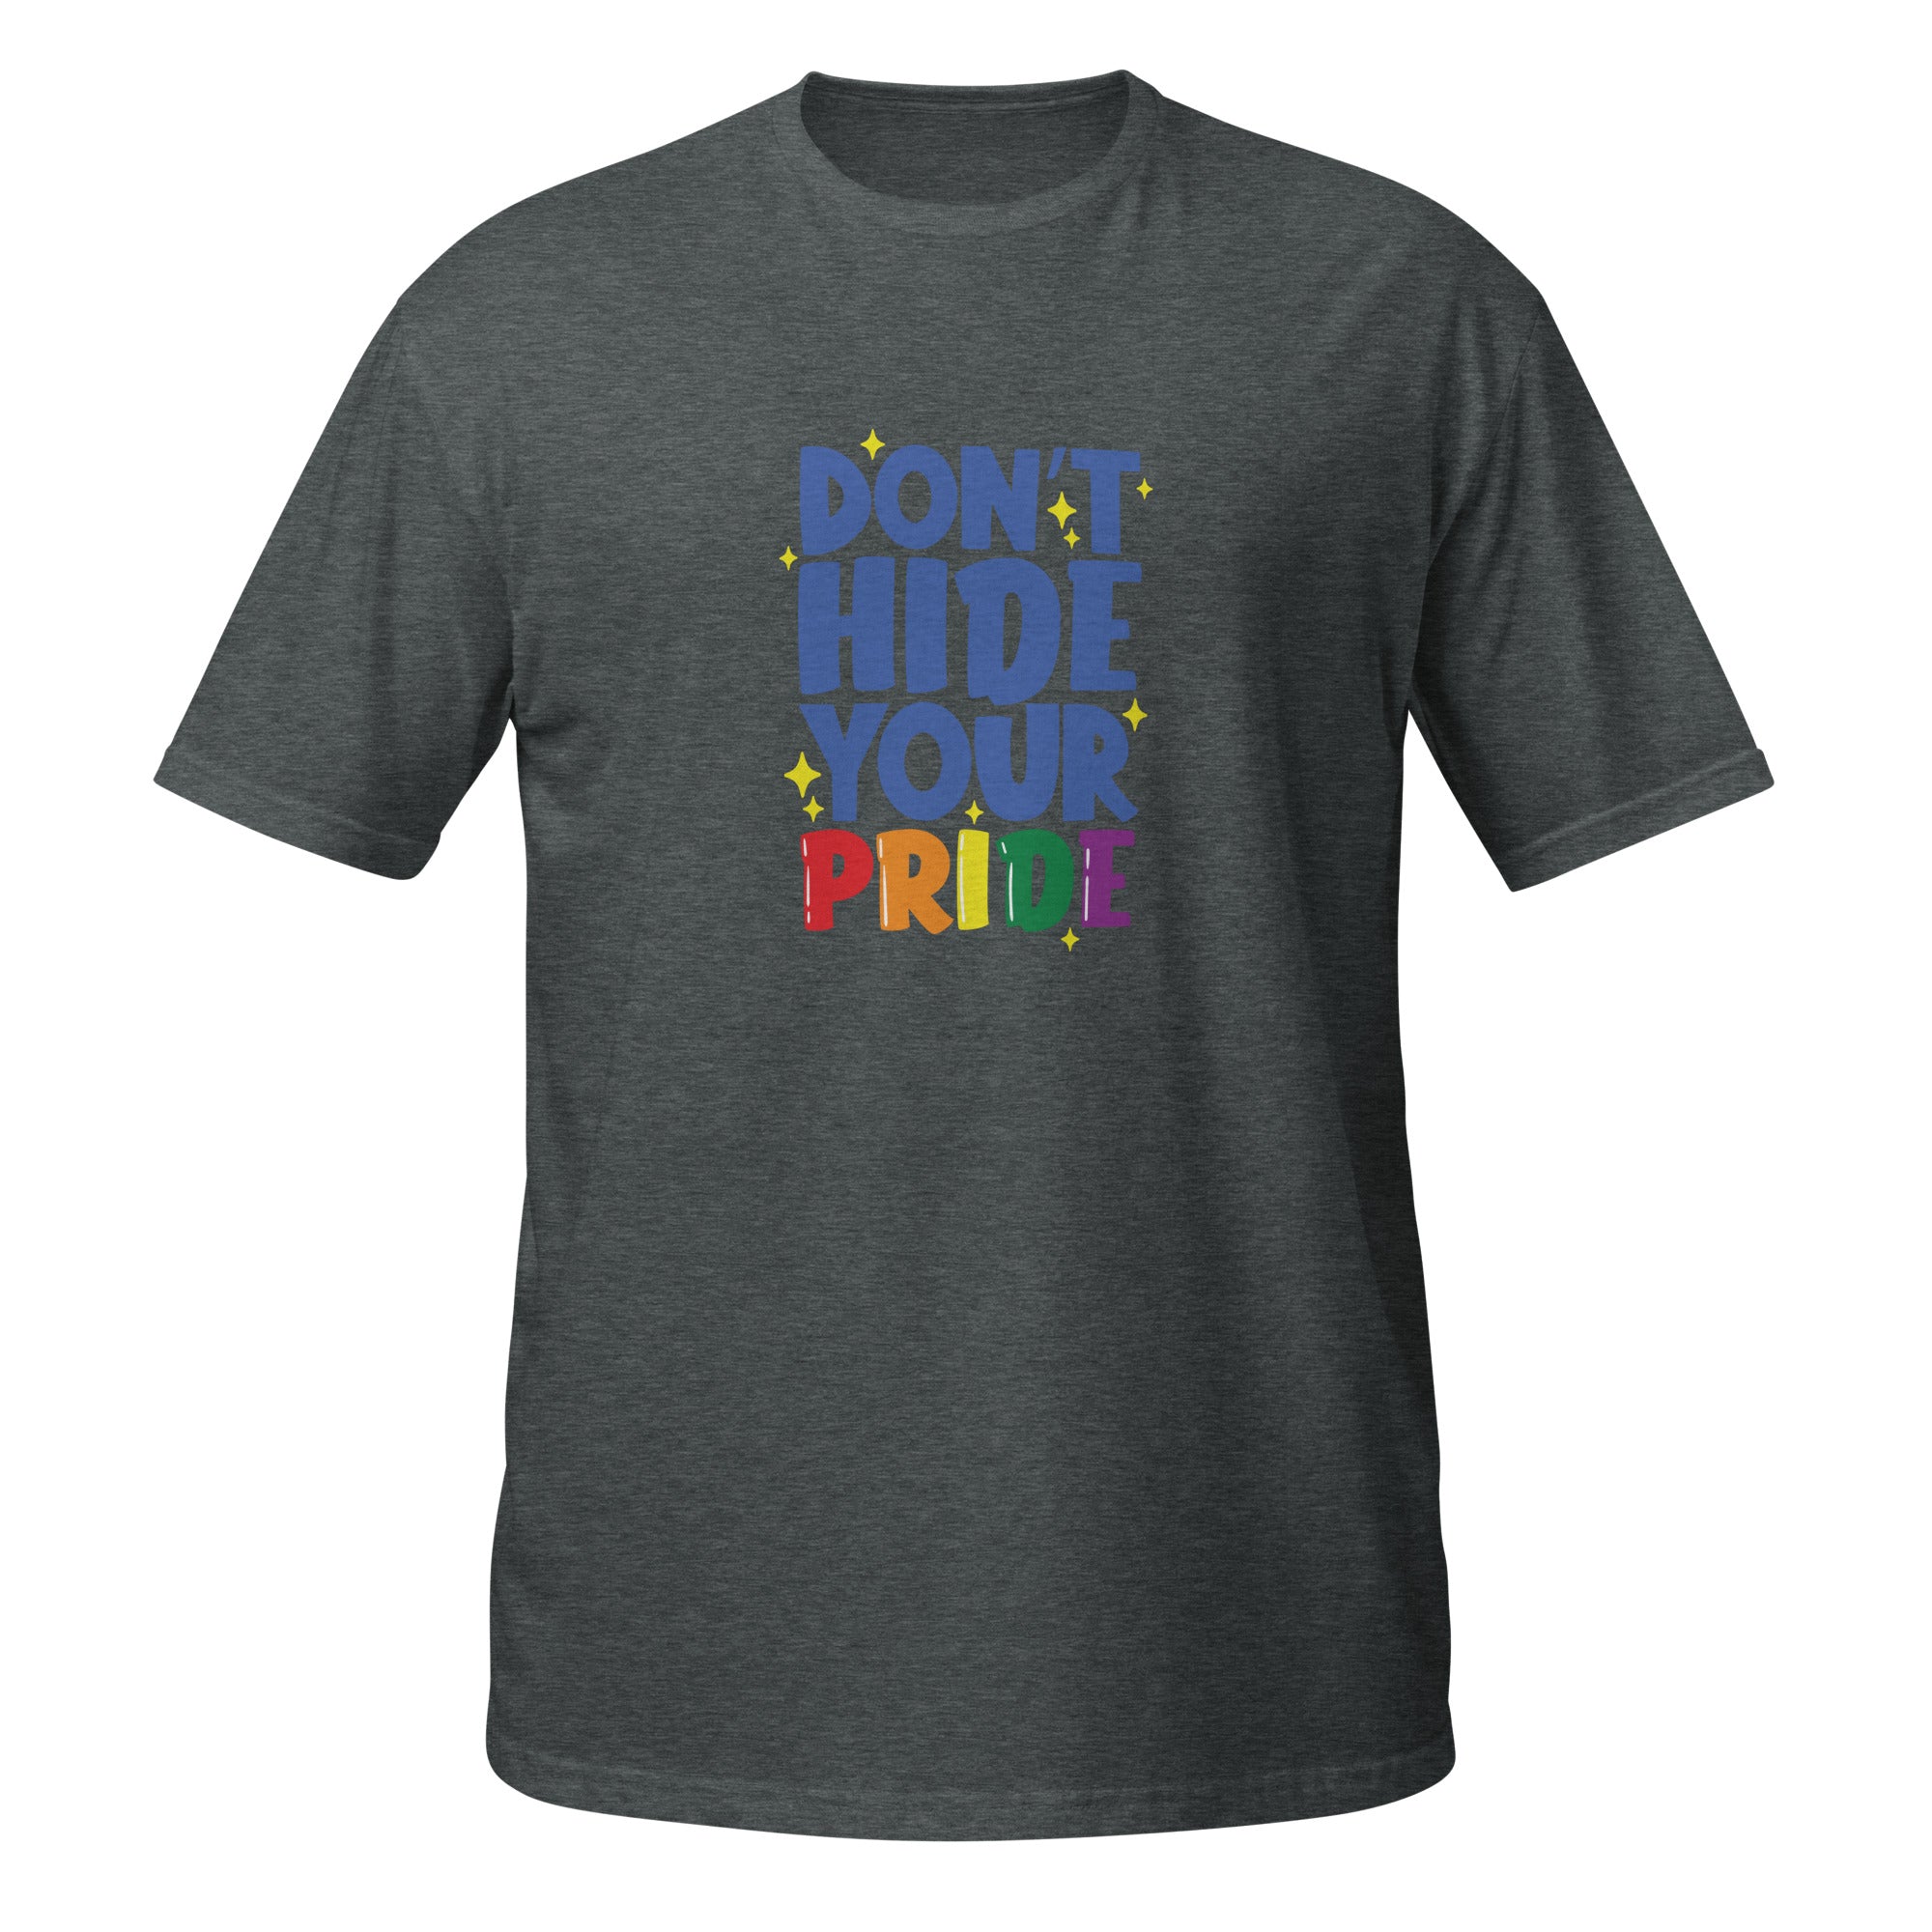 Short-Sleeve Unisex T-Shirt- Don't hide your pride